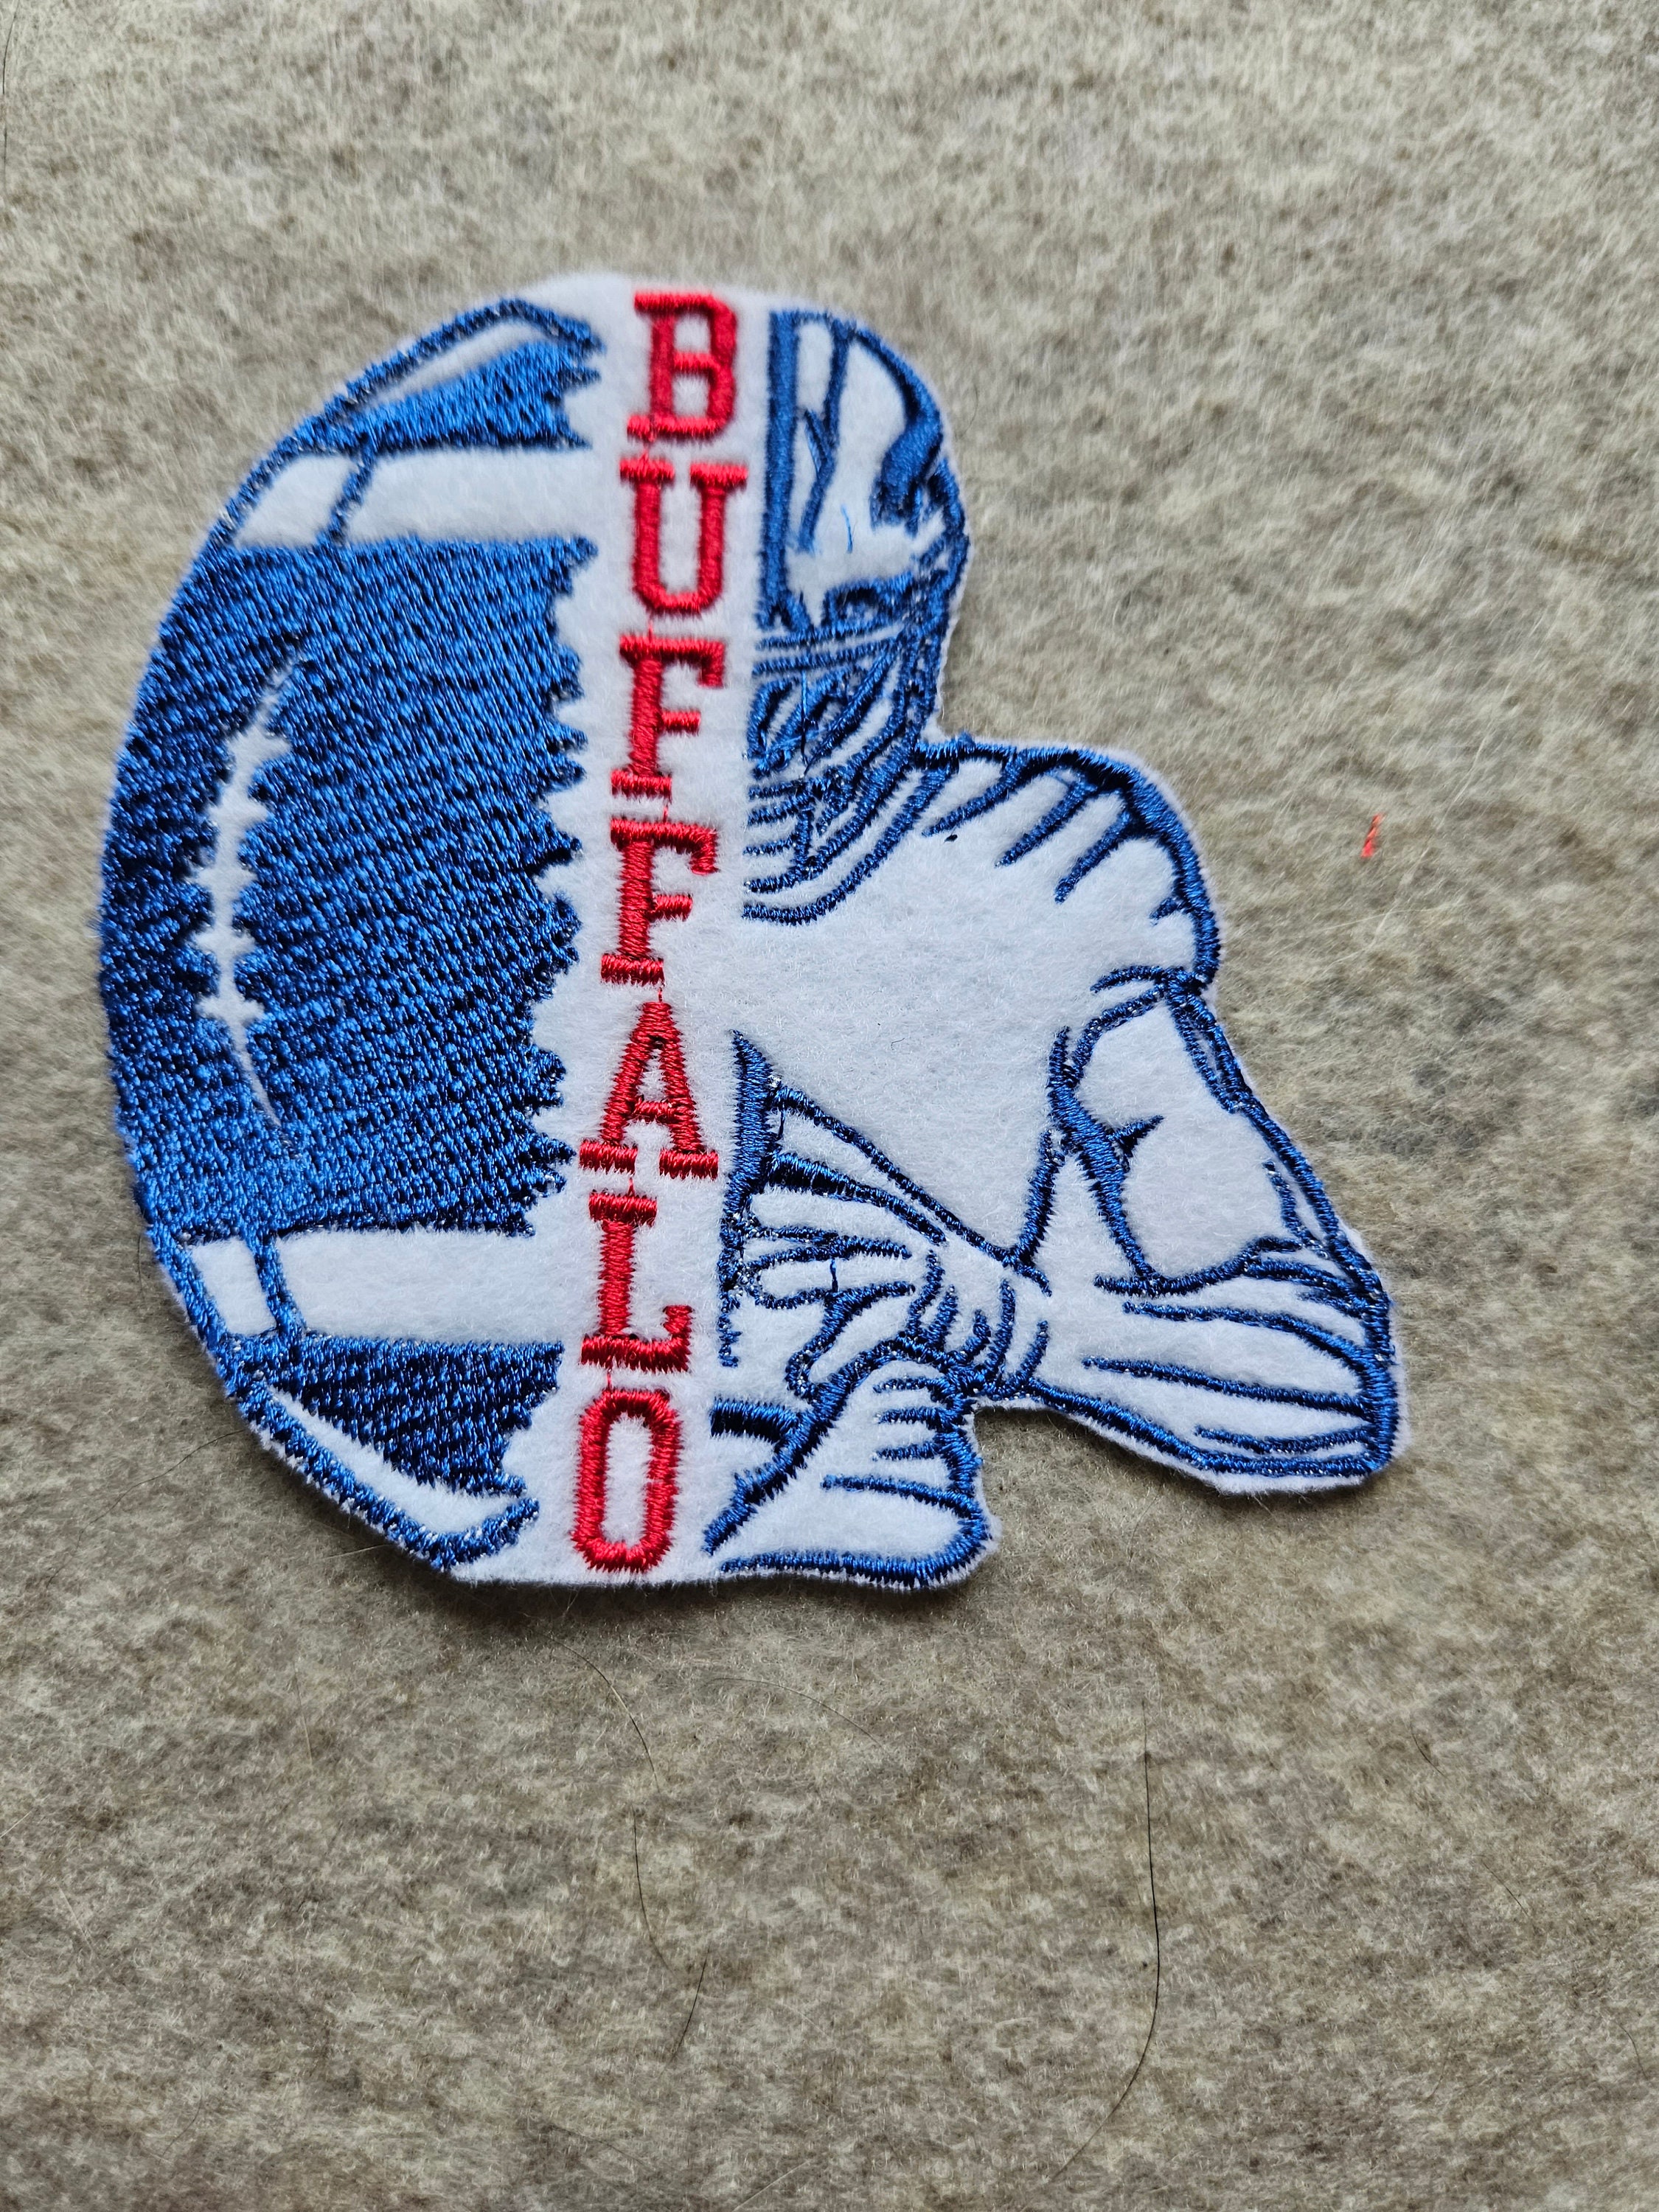 18. Buffalo Football, Hockey, Lacrosse, Baseball Iron on Patch 2 Sizes 